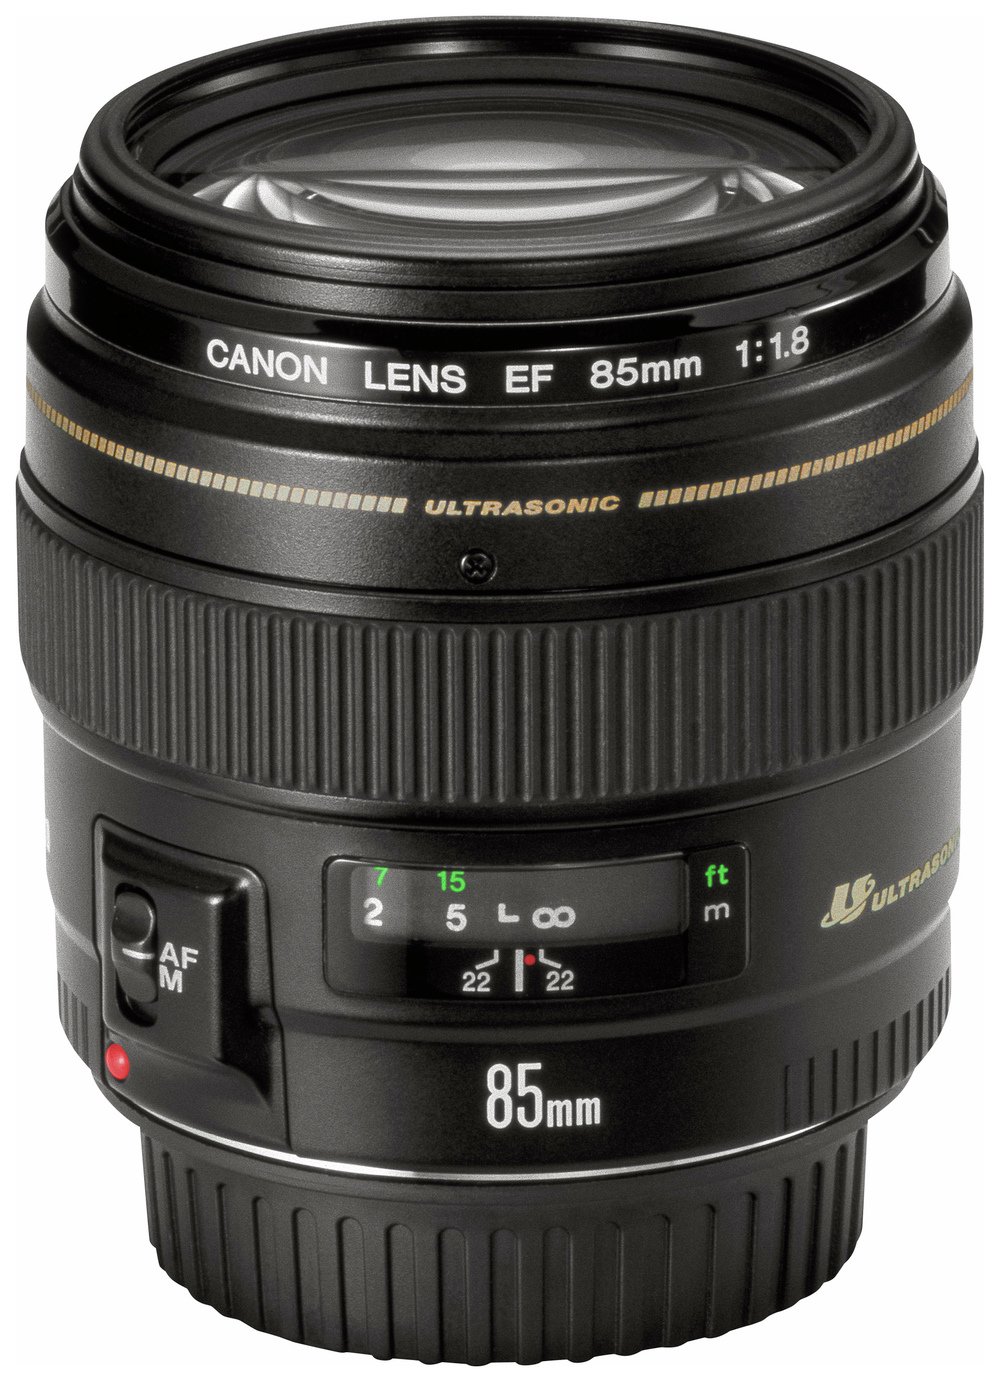 Canon EF 85MM F/1.8 USM Lens review